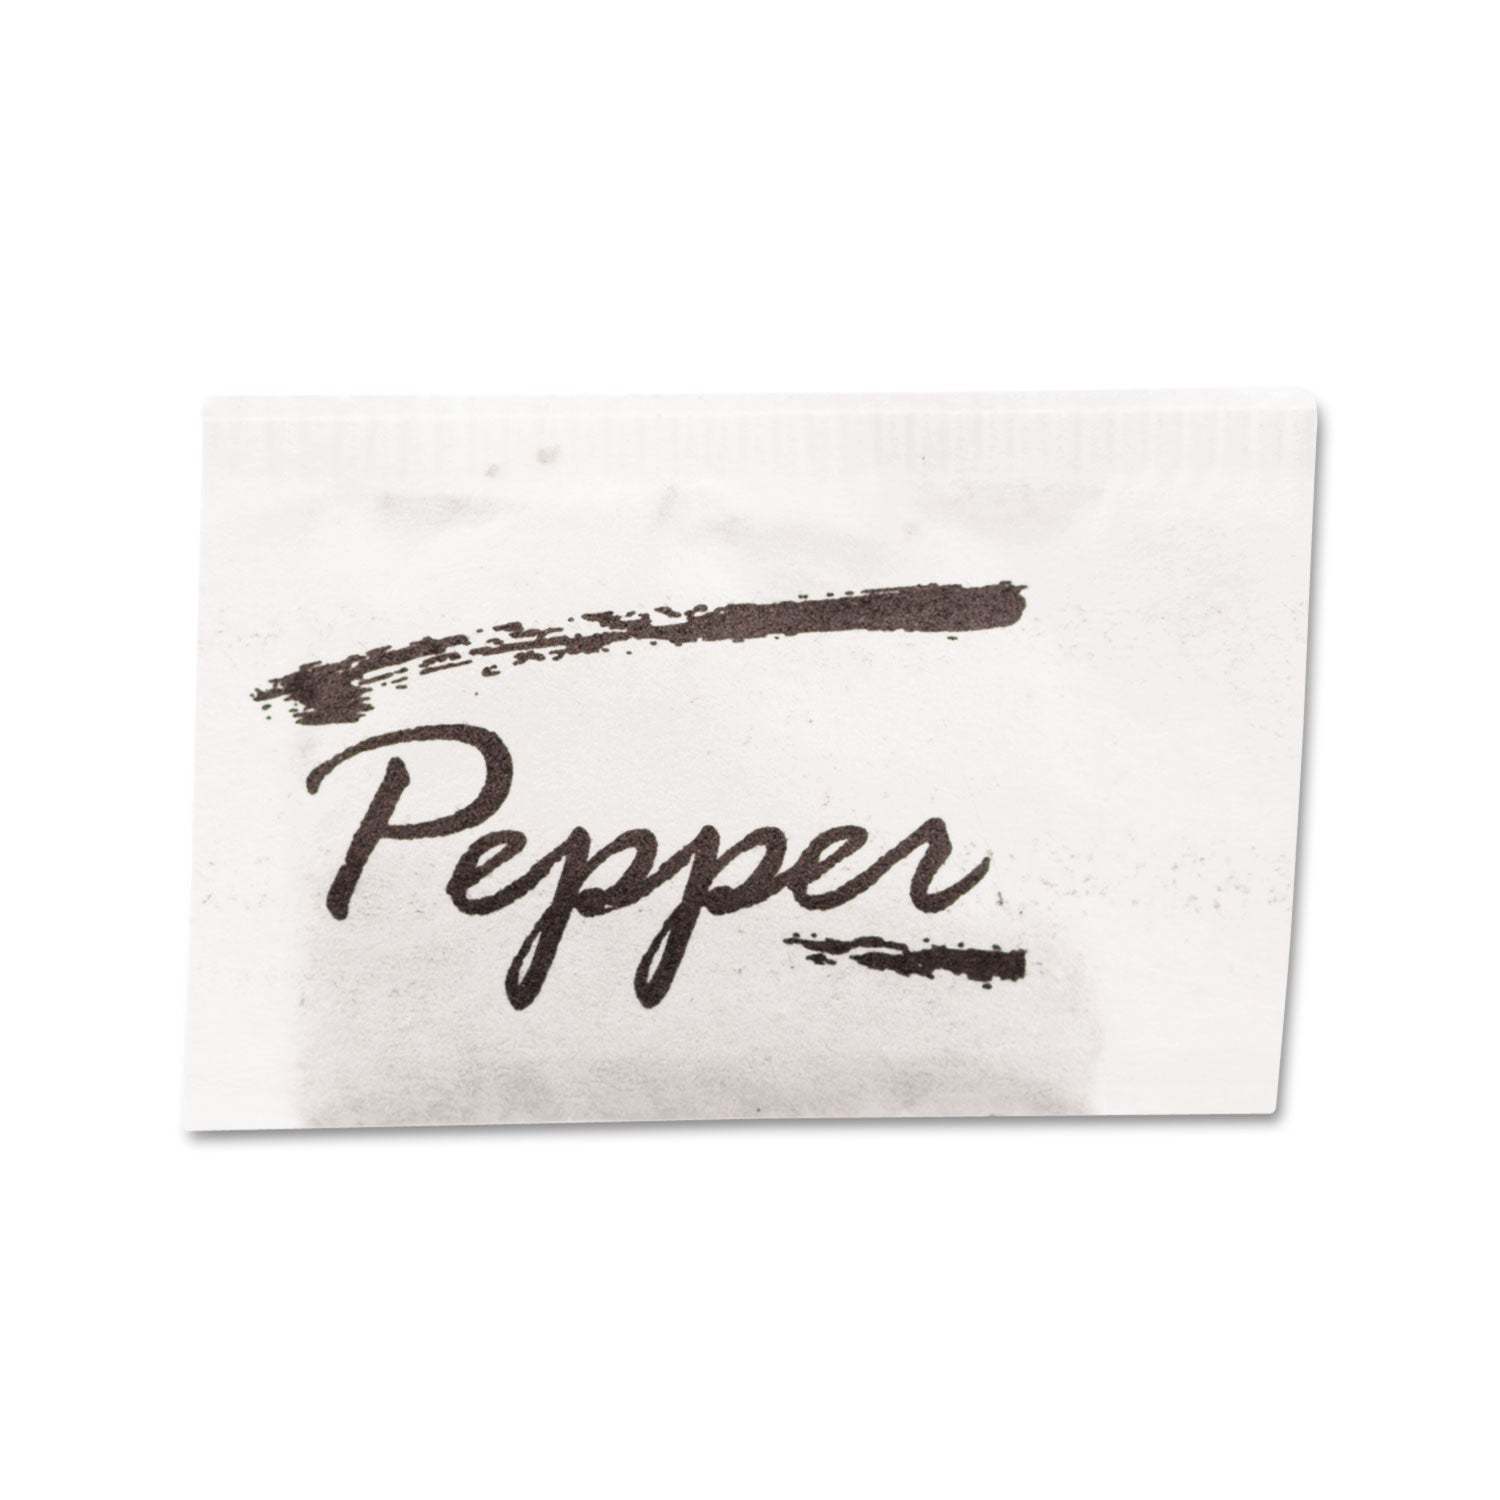 pepper-packets-01-grams-3000-carton_mkl14462 - 1